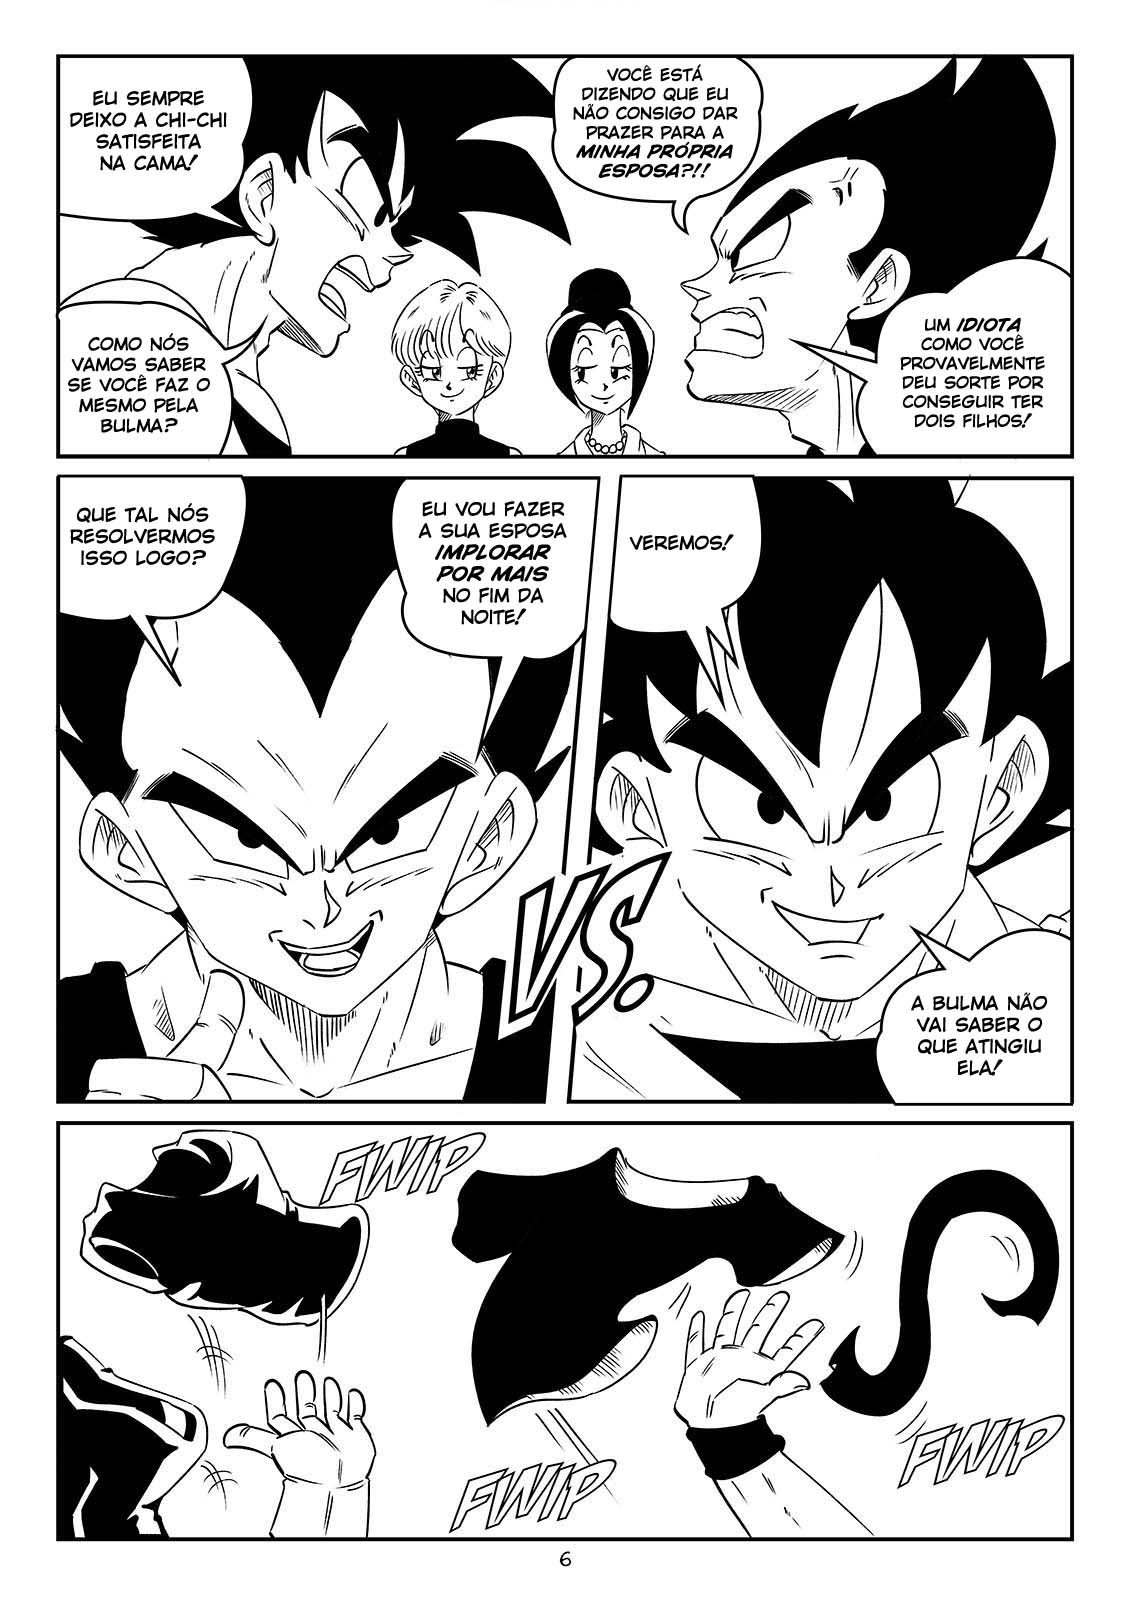 Troca de casais - Chi-Chi e Vegeta vs Goku e Bulma